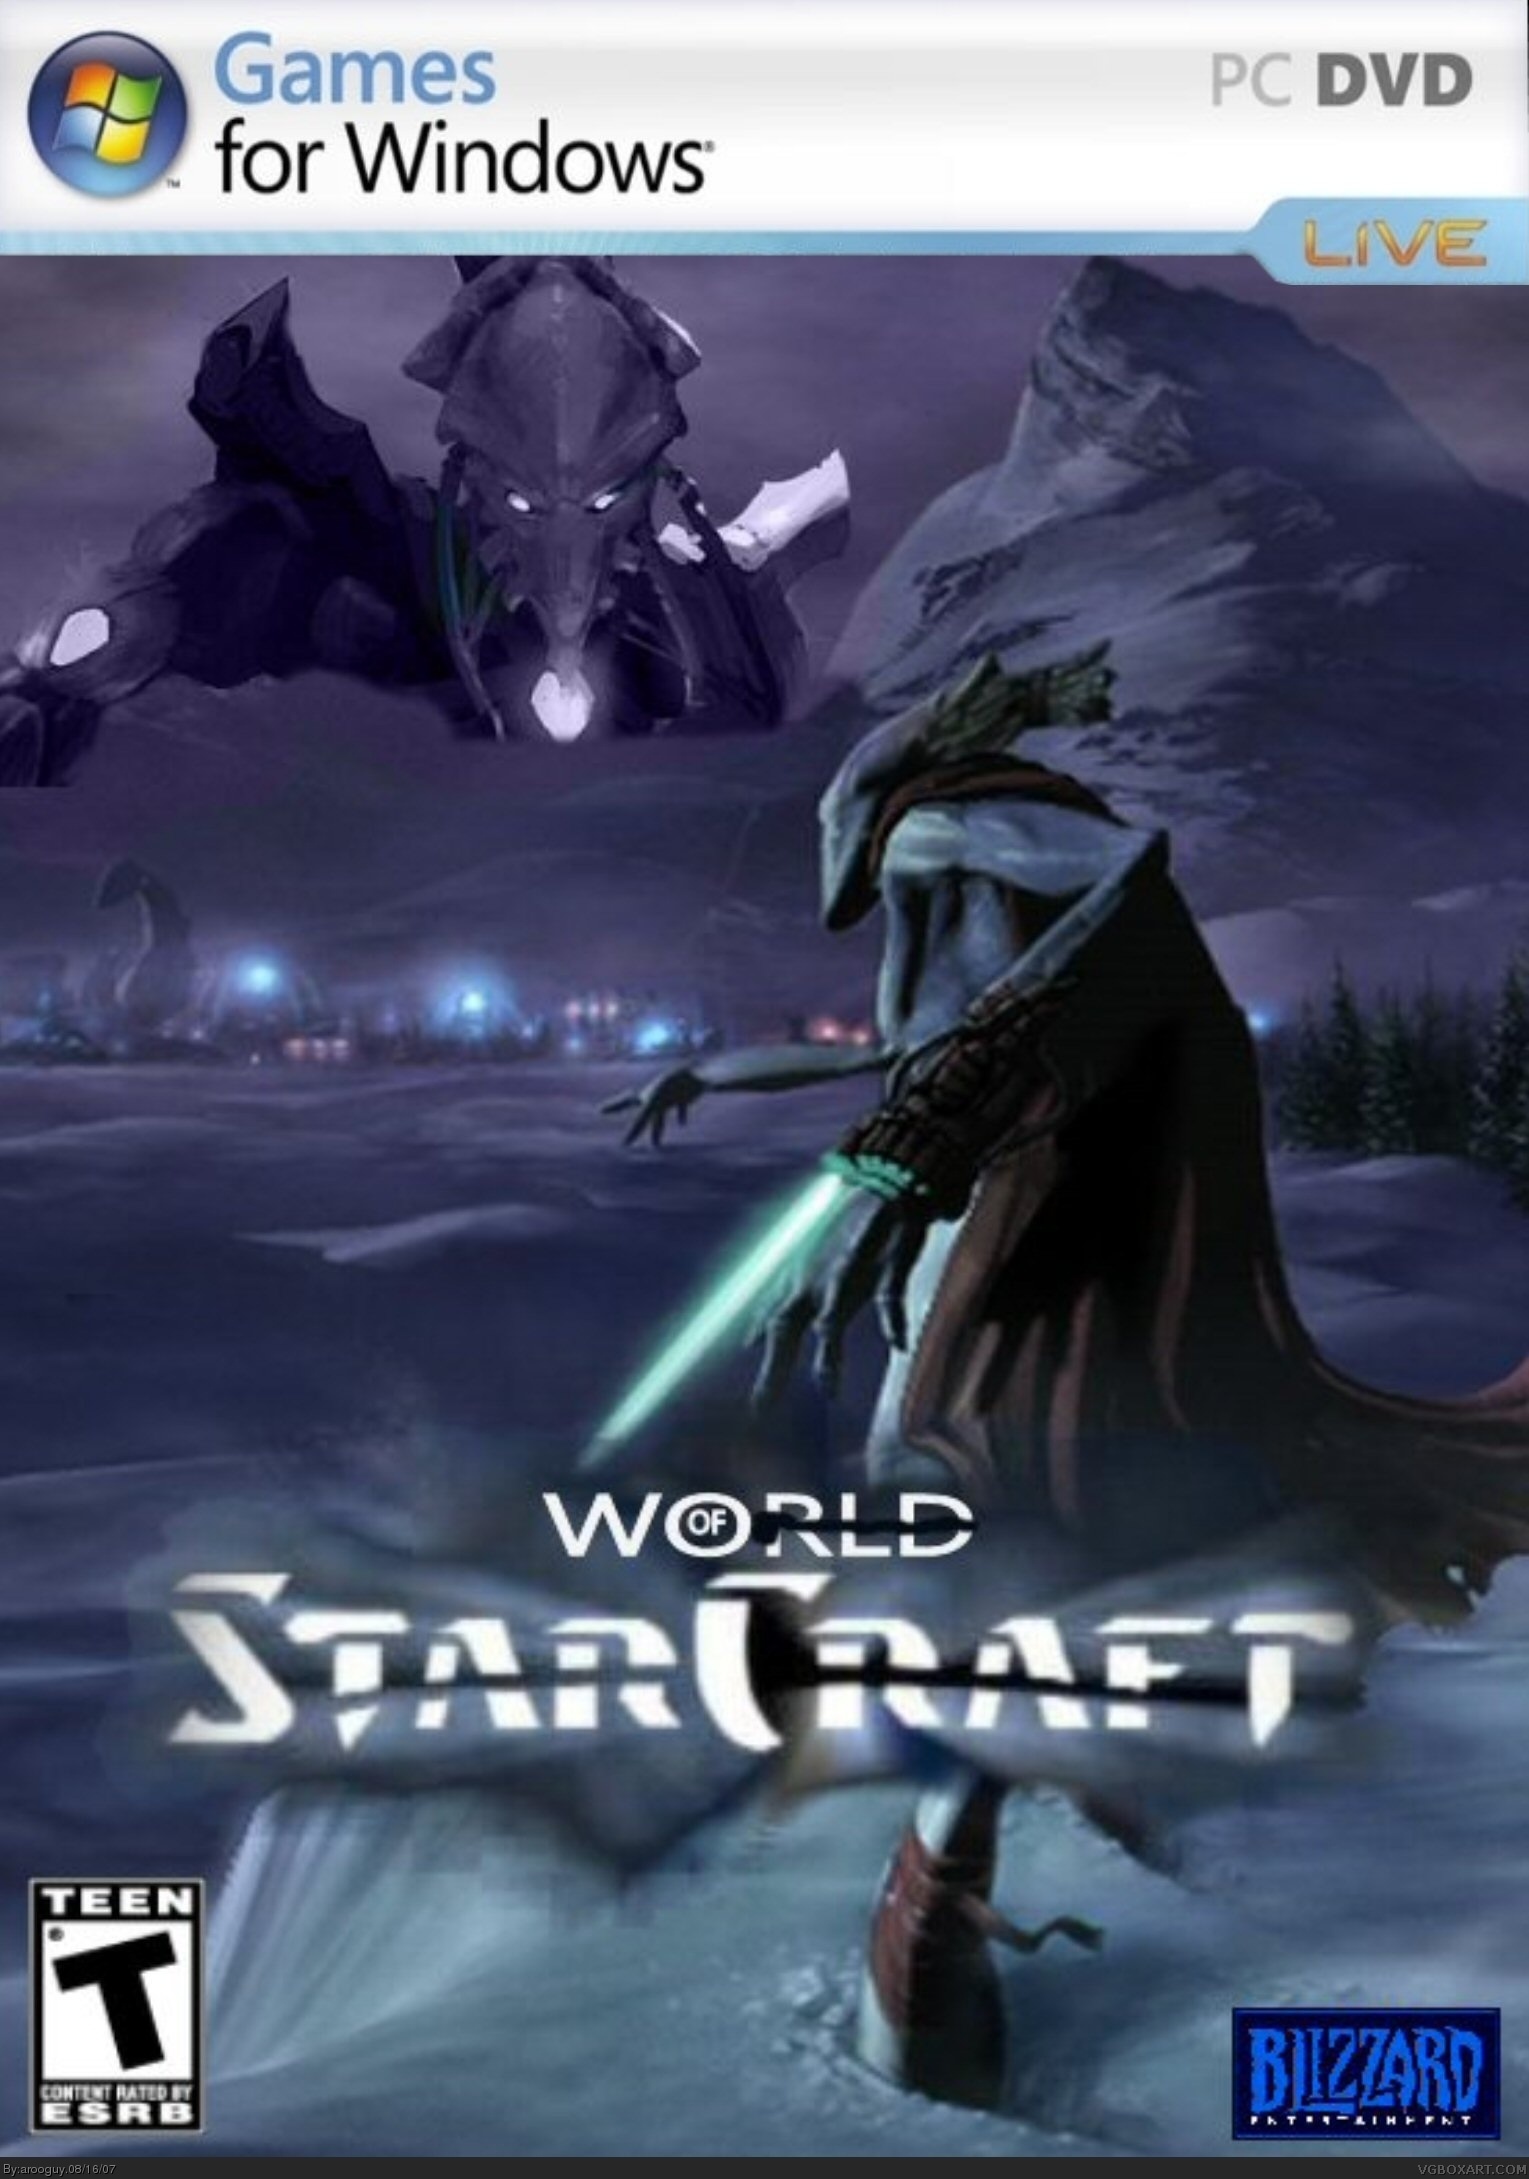 World of StarCraft box cover